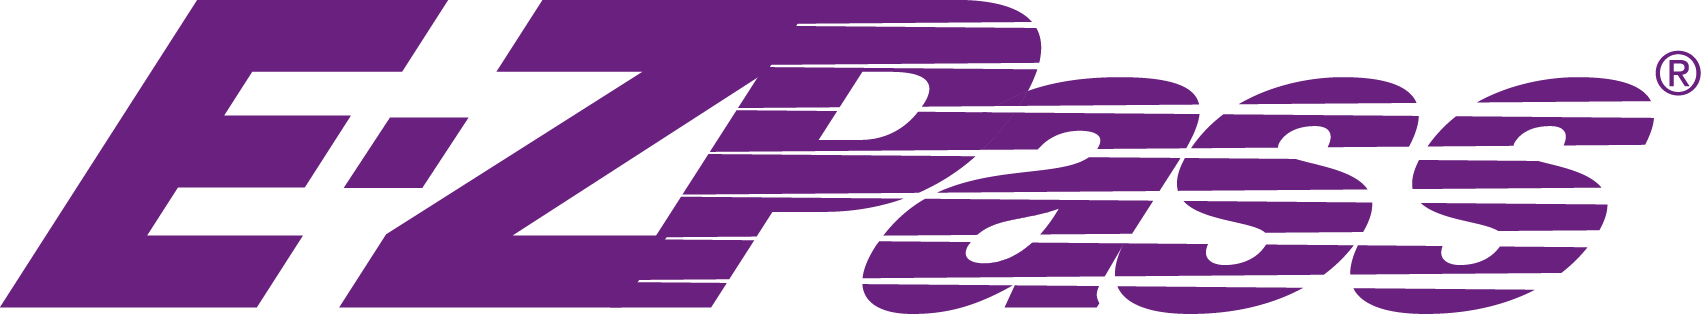 E-ZPass Logo - Graphics